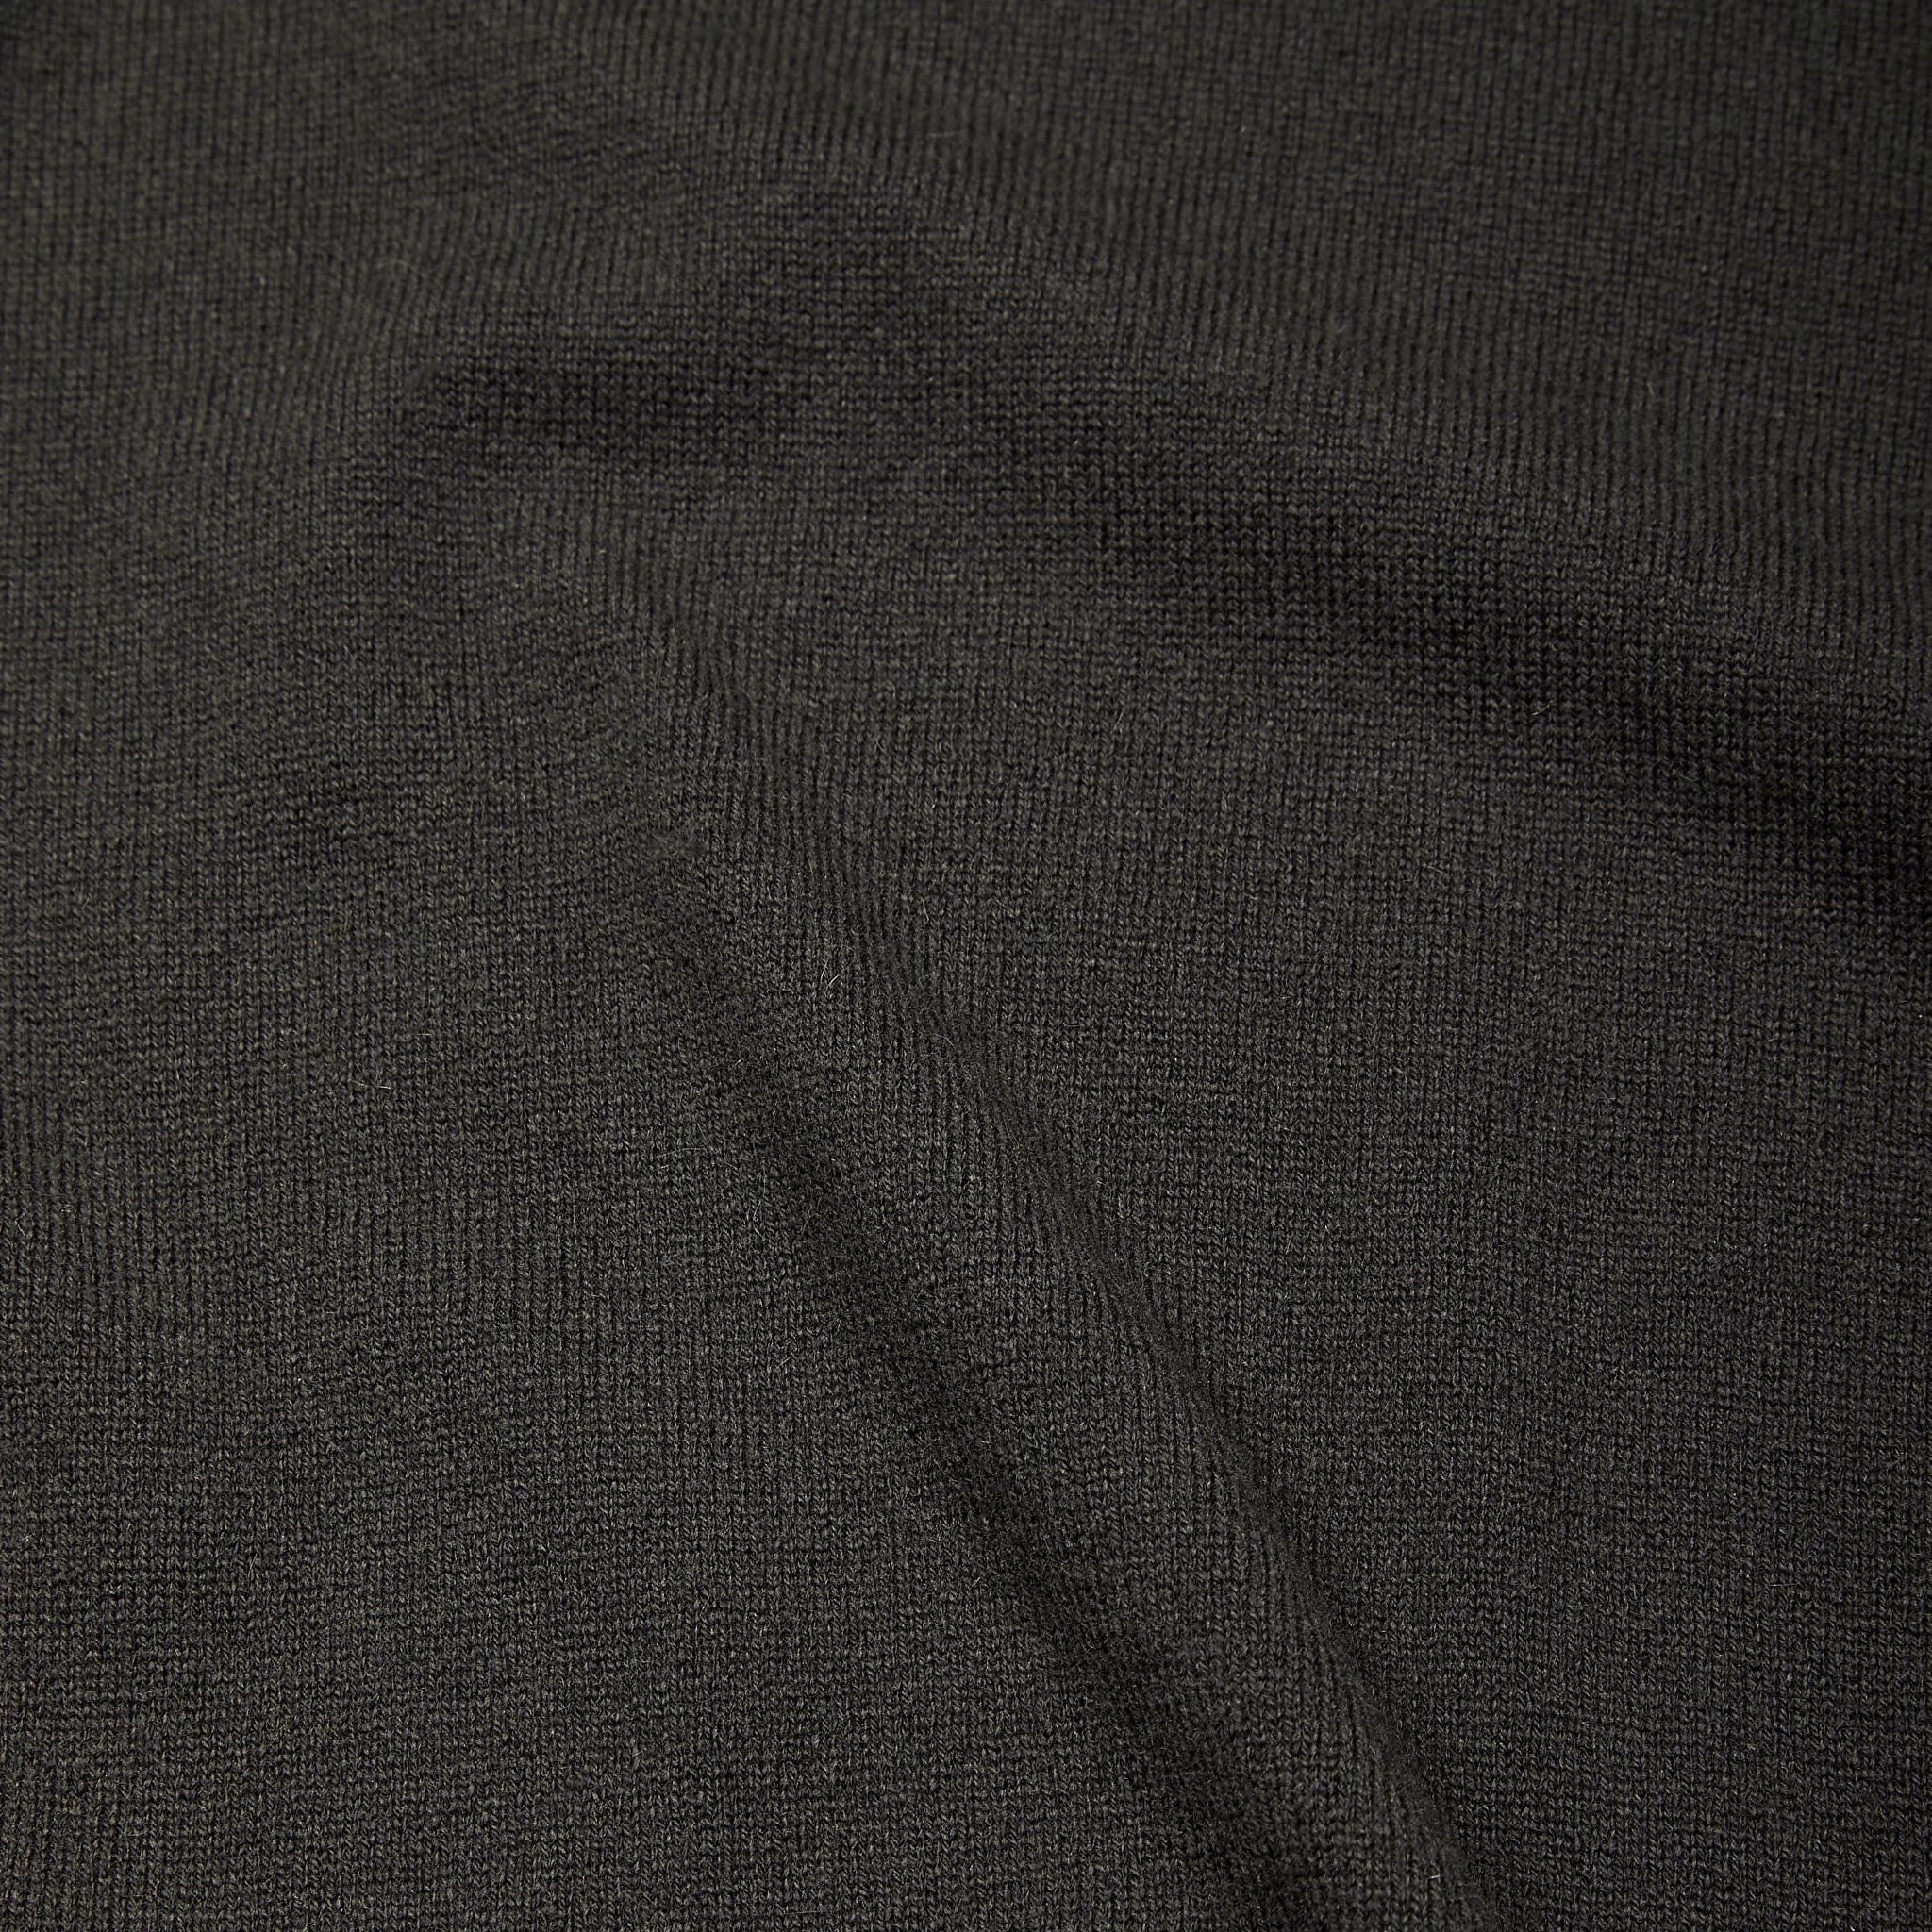 Cashmere shirt cardigan in dark olive